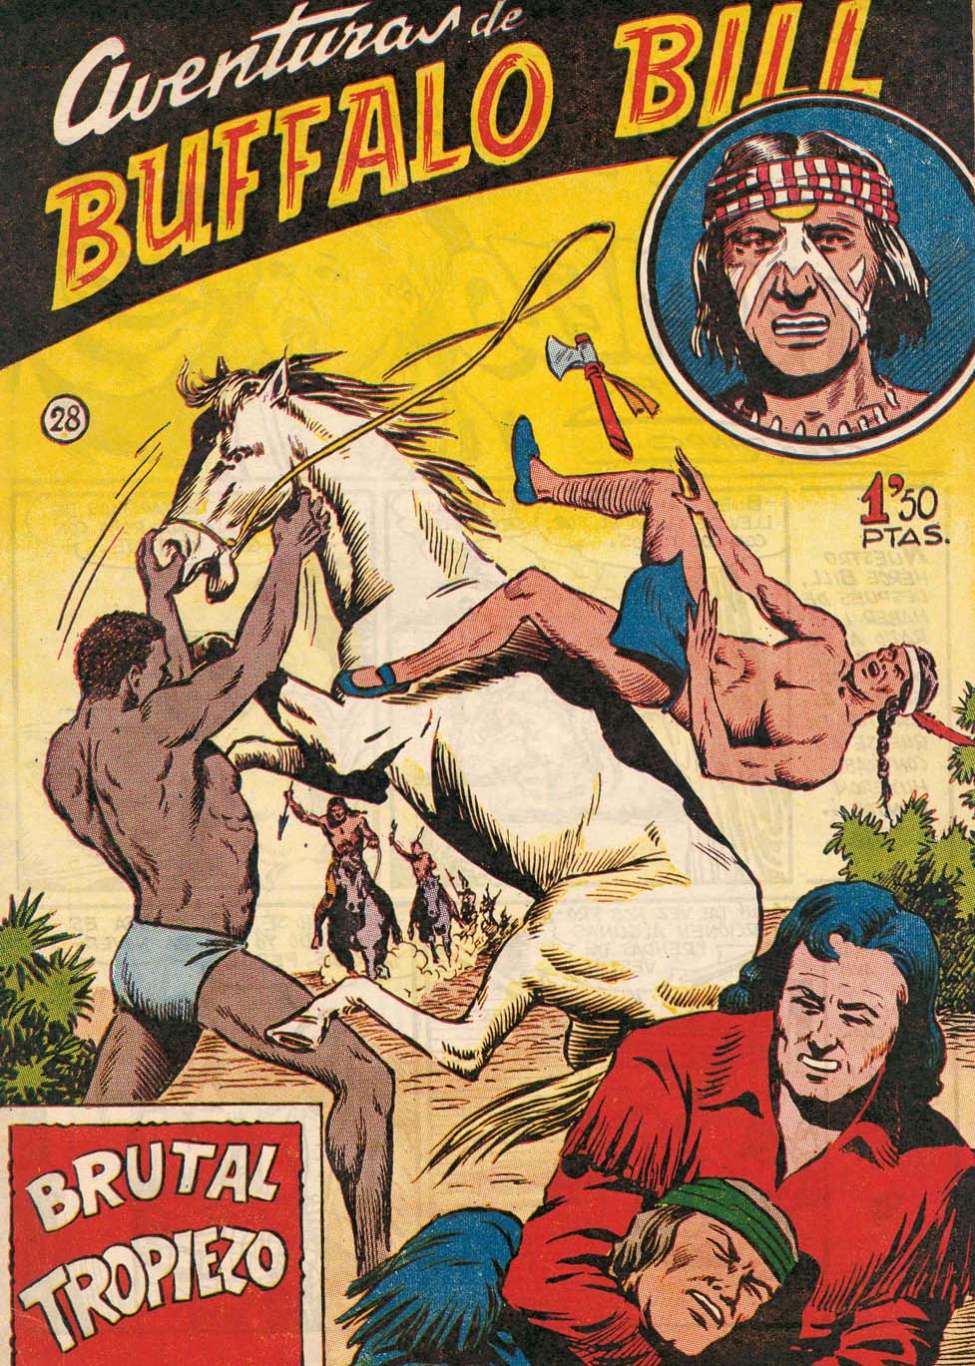 Comic Book Cover For Aventuras de Buffalo Bill 28 Brutal tropiezo